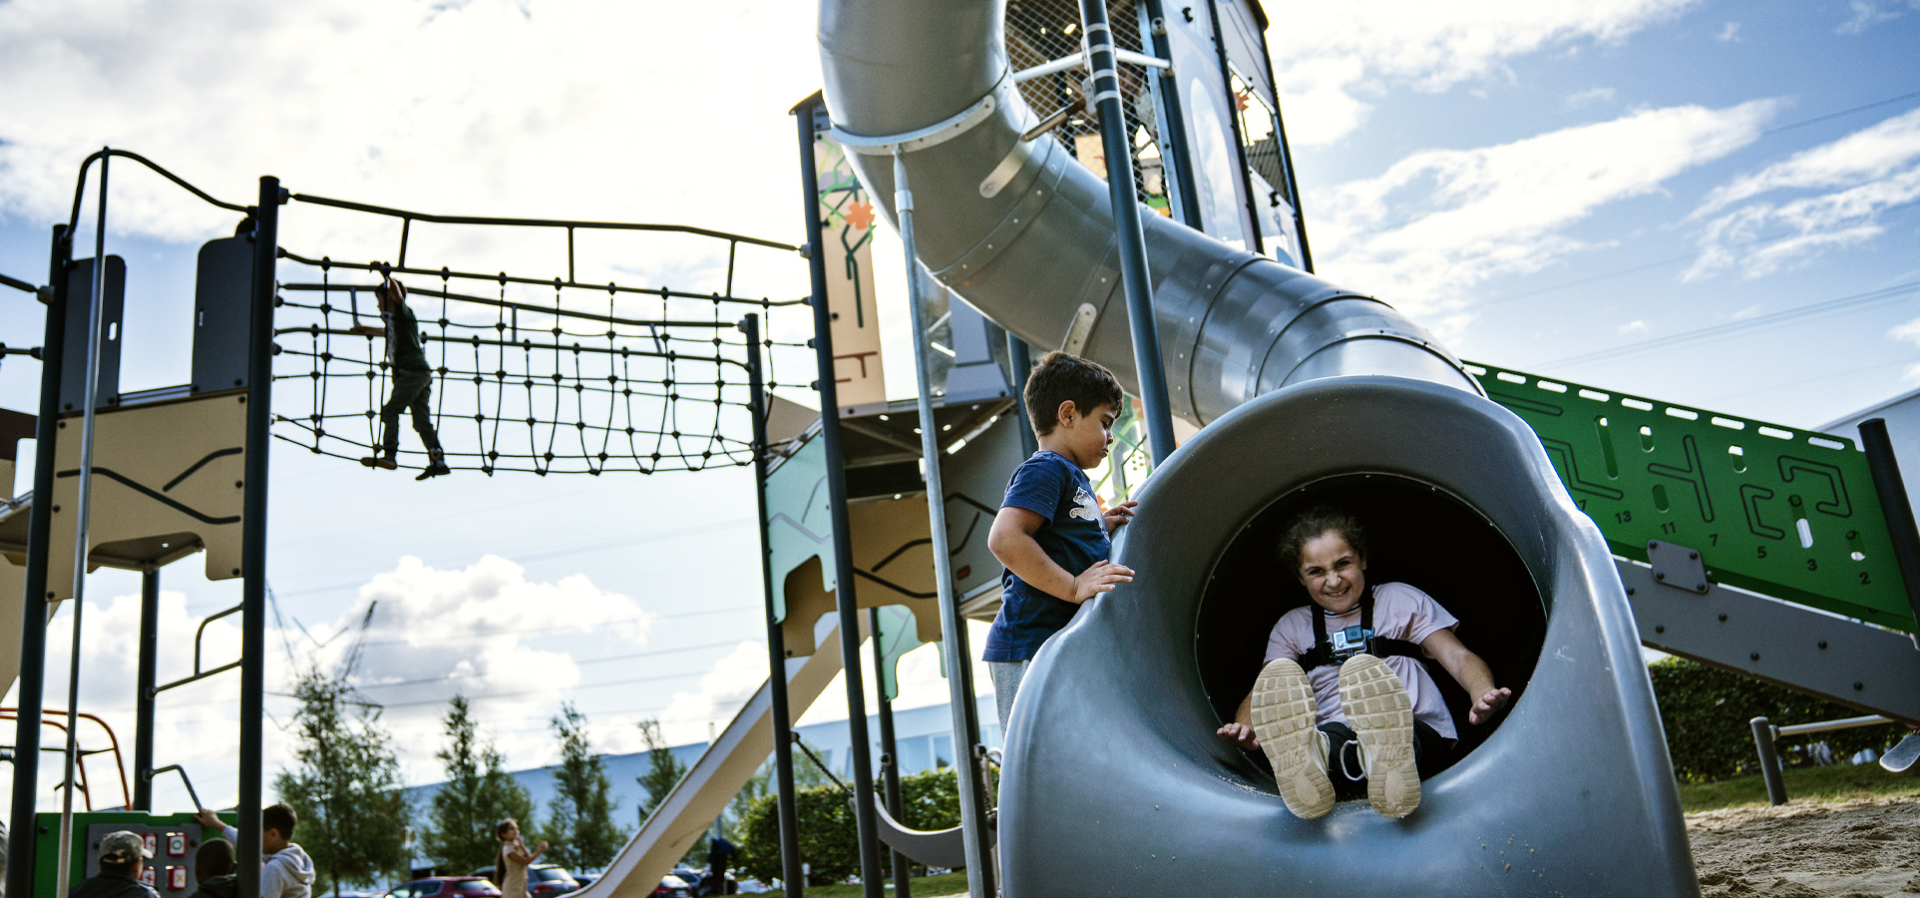 kompan latest news children playing on a giants playground set